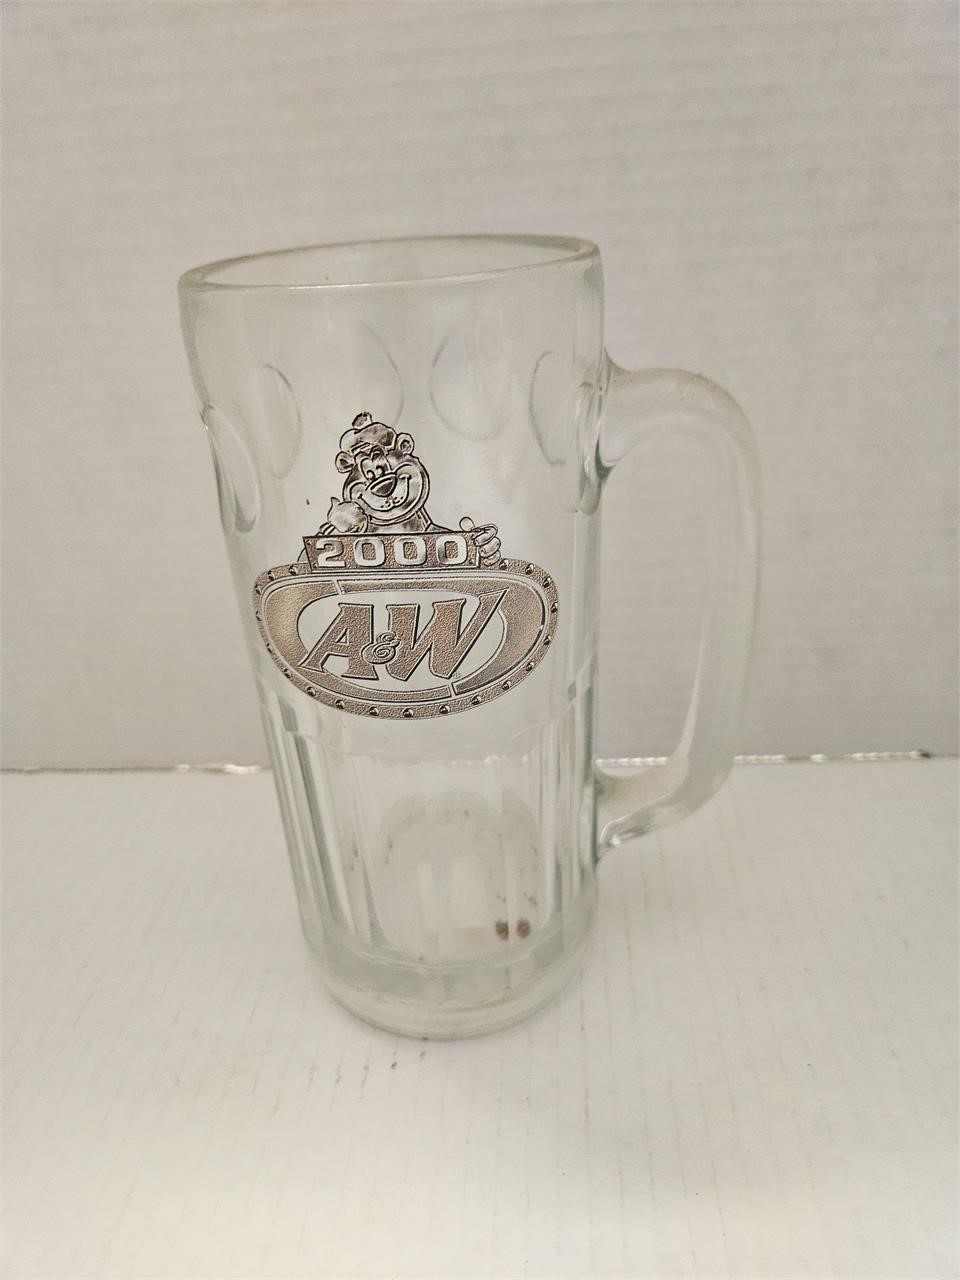 2000 A&W Glass Root Beer Mug